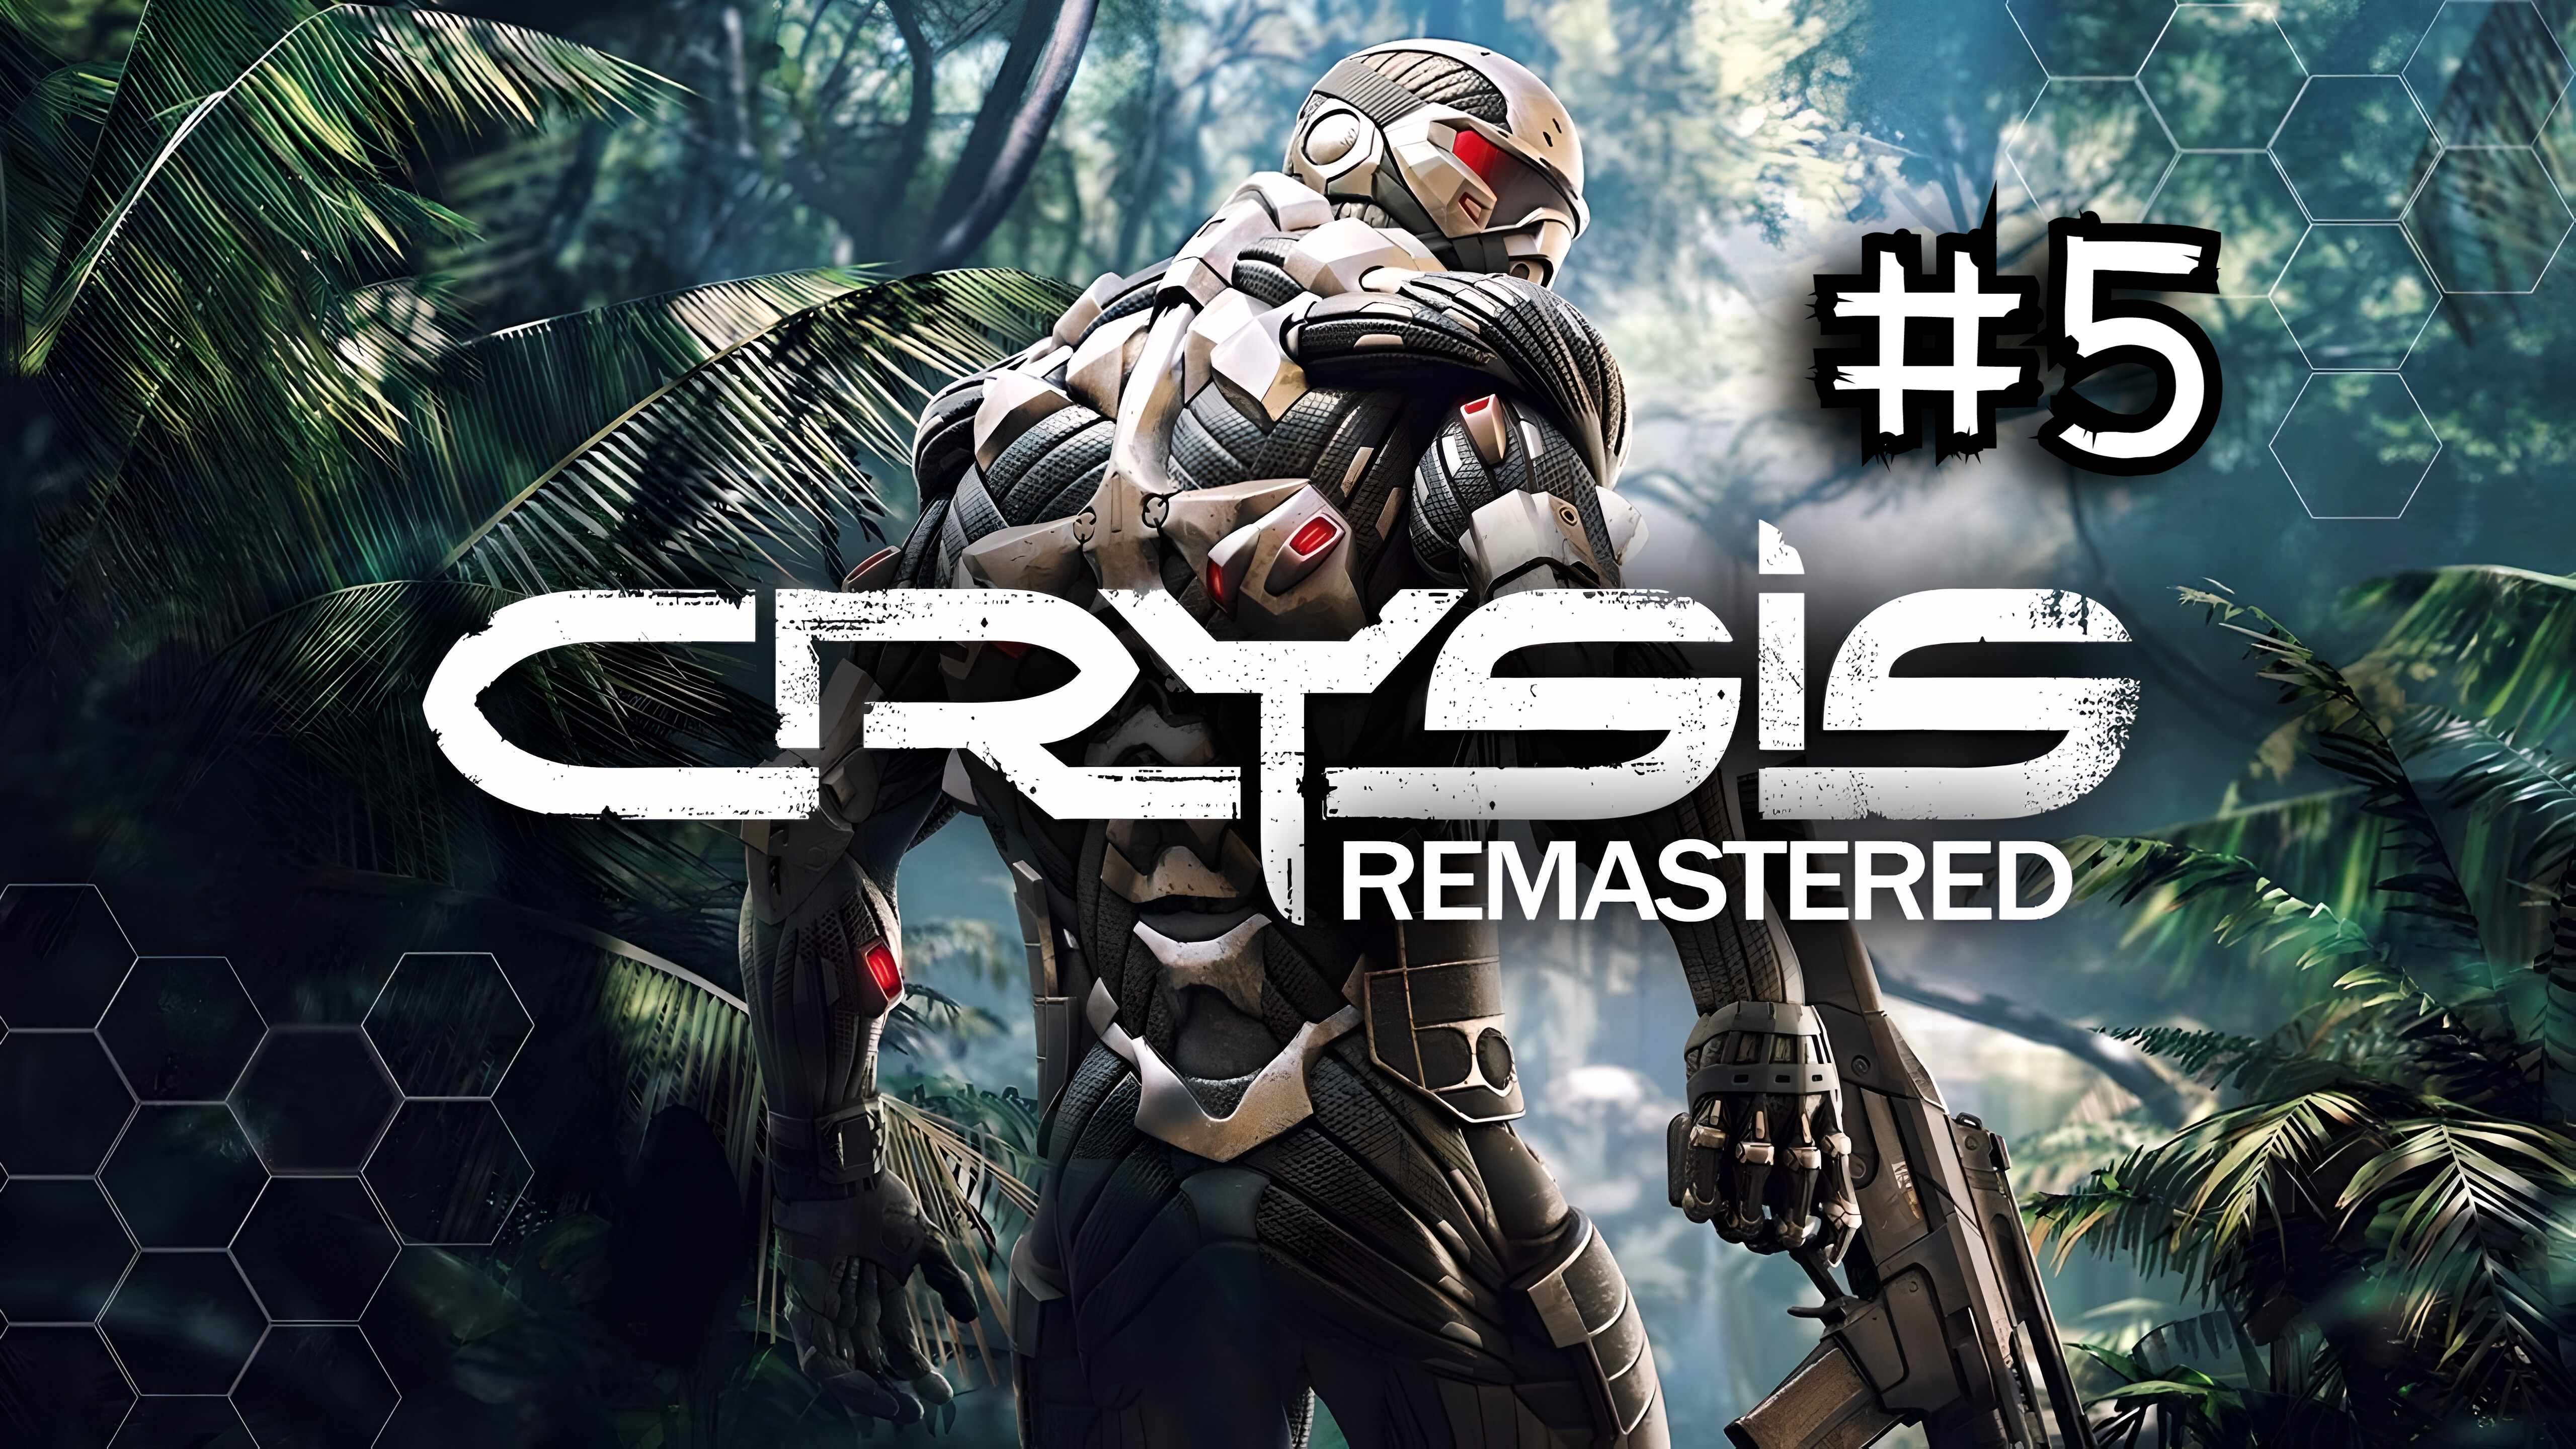 Crysis Remastered #5